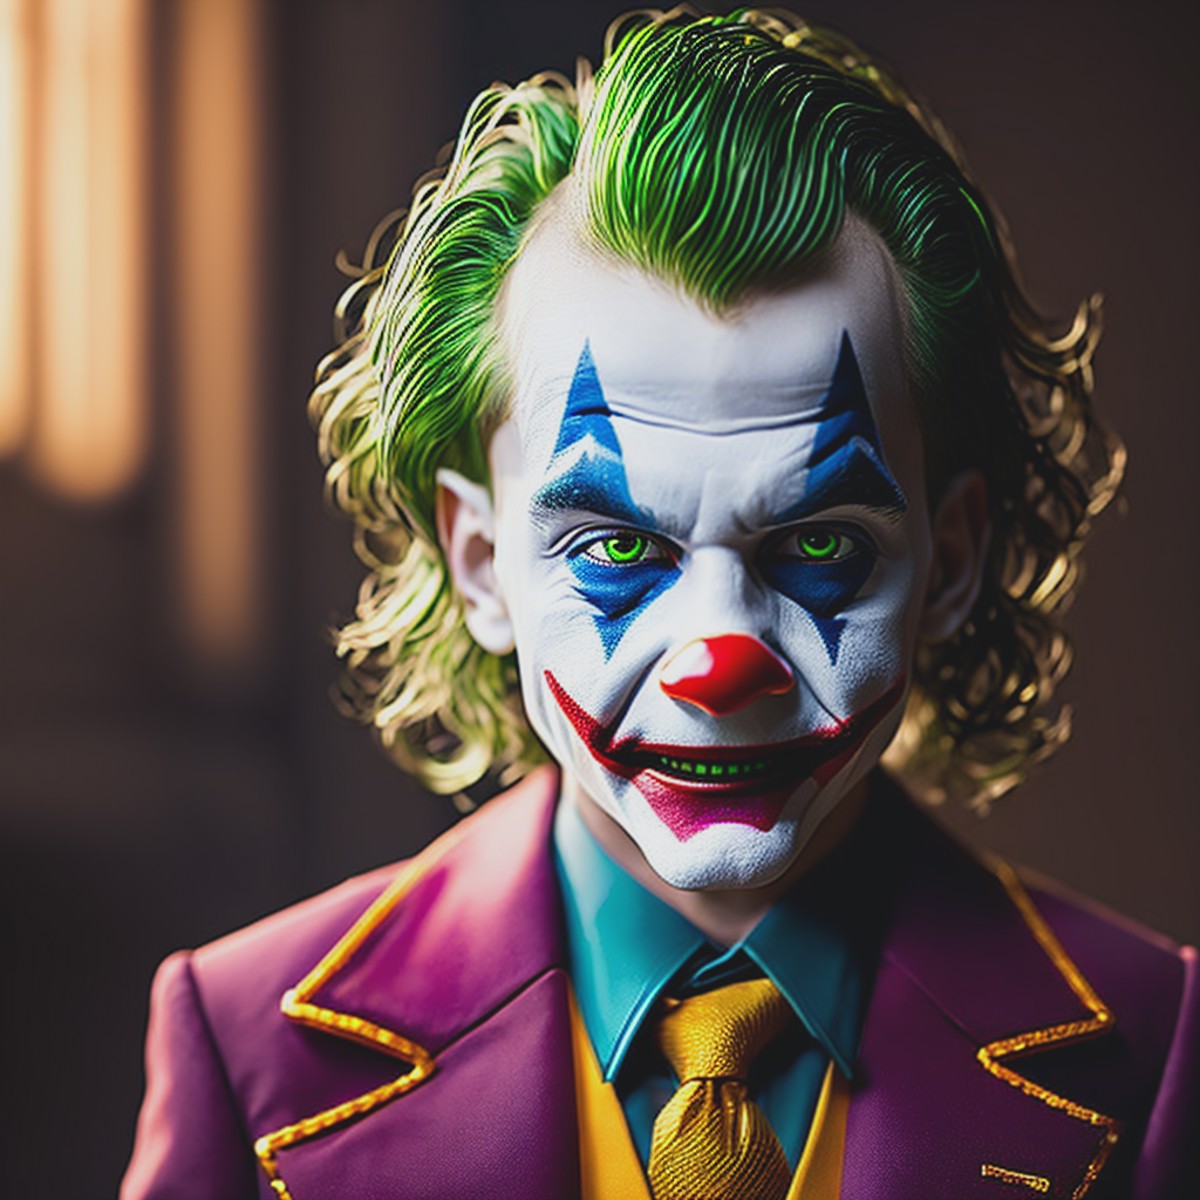 Joker, childhood, staring at camera, soft natural lighting, portrait photography, magical photography, dramatic lighting, ...